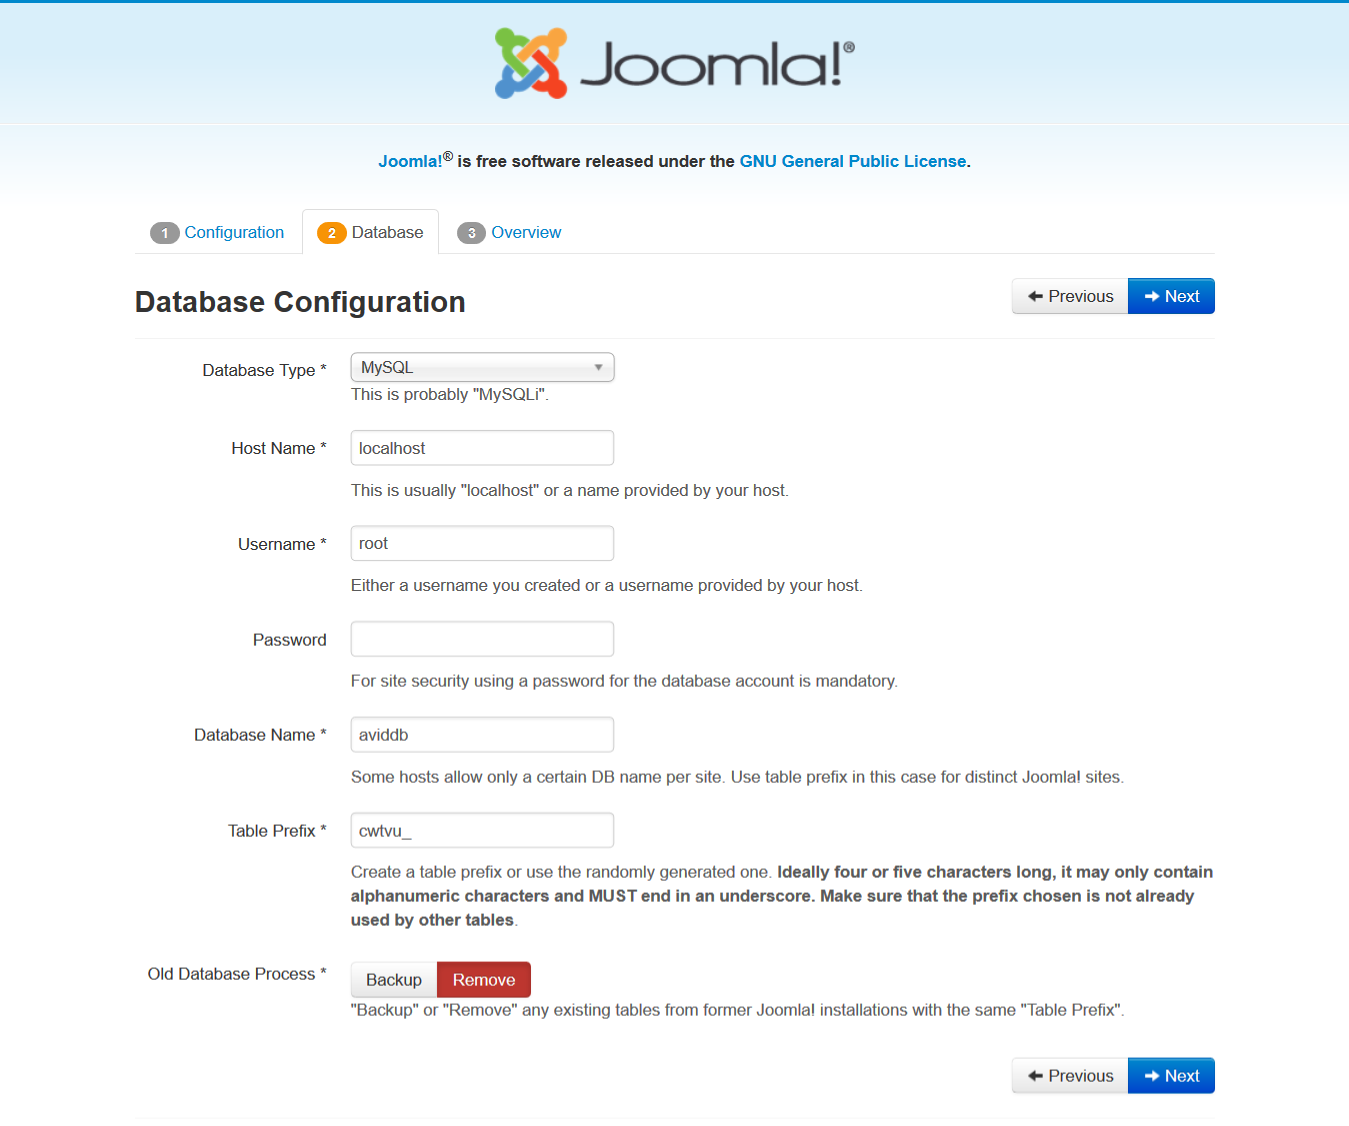 Adding Database Configuration details for Joomla